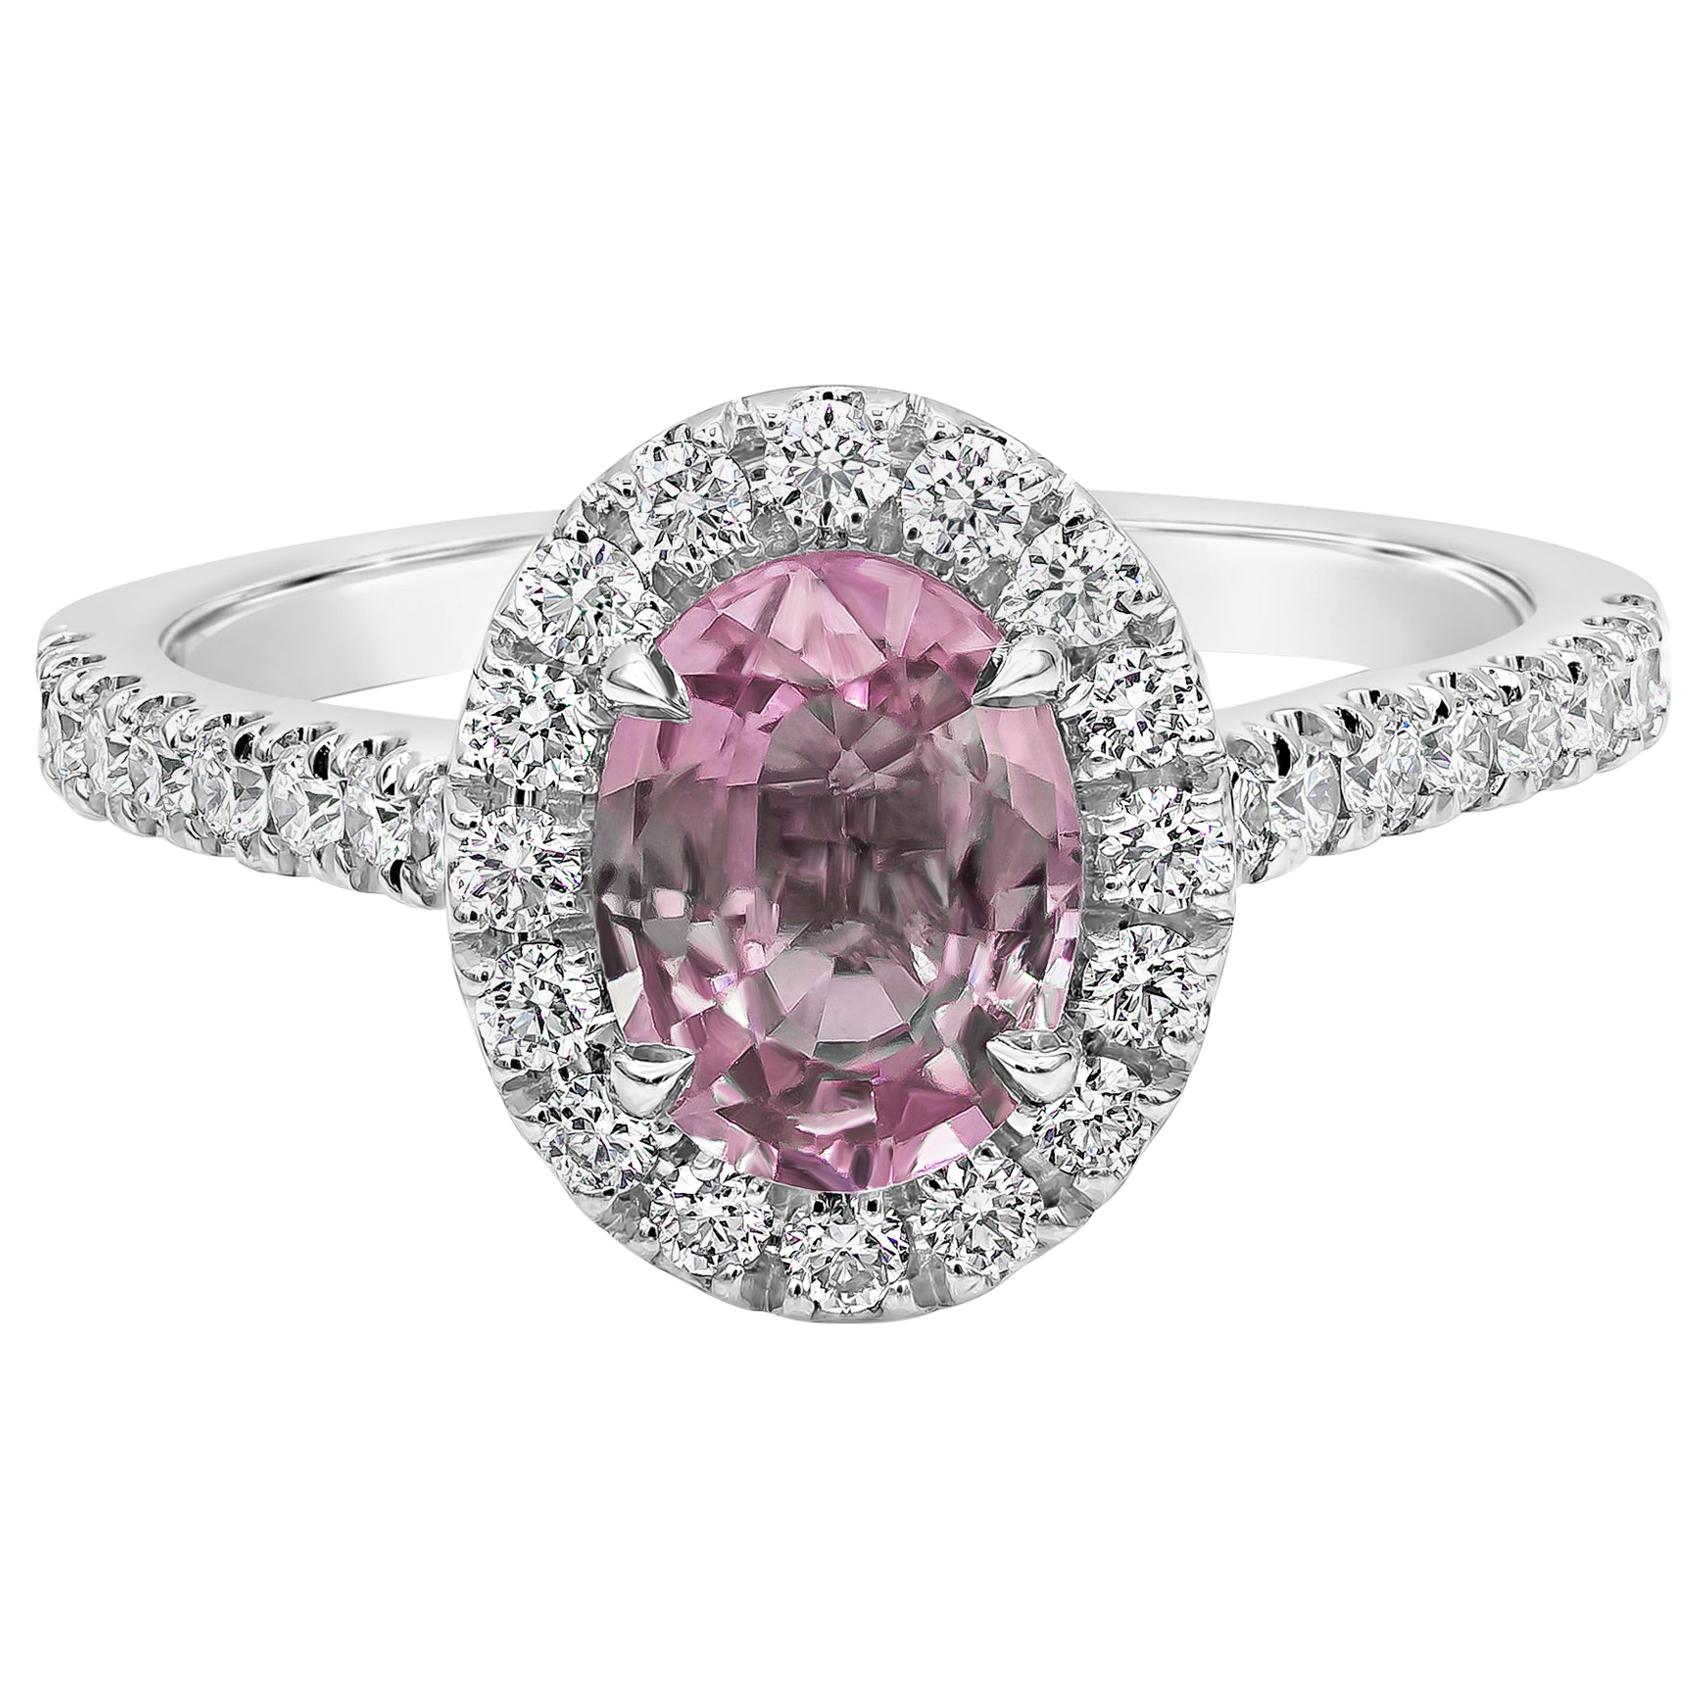 Roman Malakov 1.57 Carat Oval Cut Pink Sapphire and Diamond Halo Engagement Ring